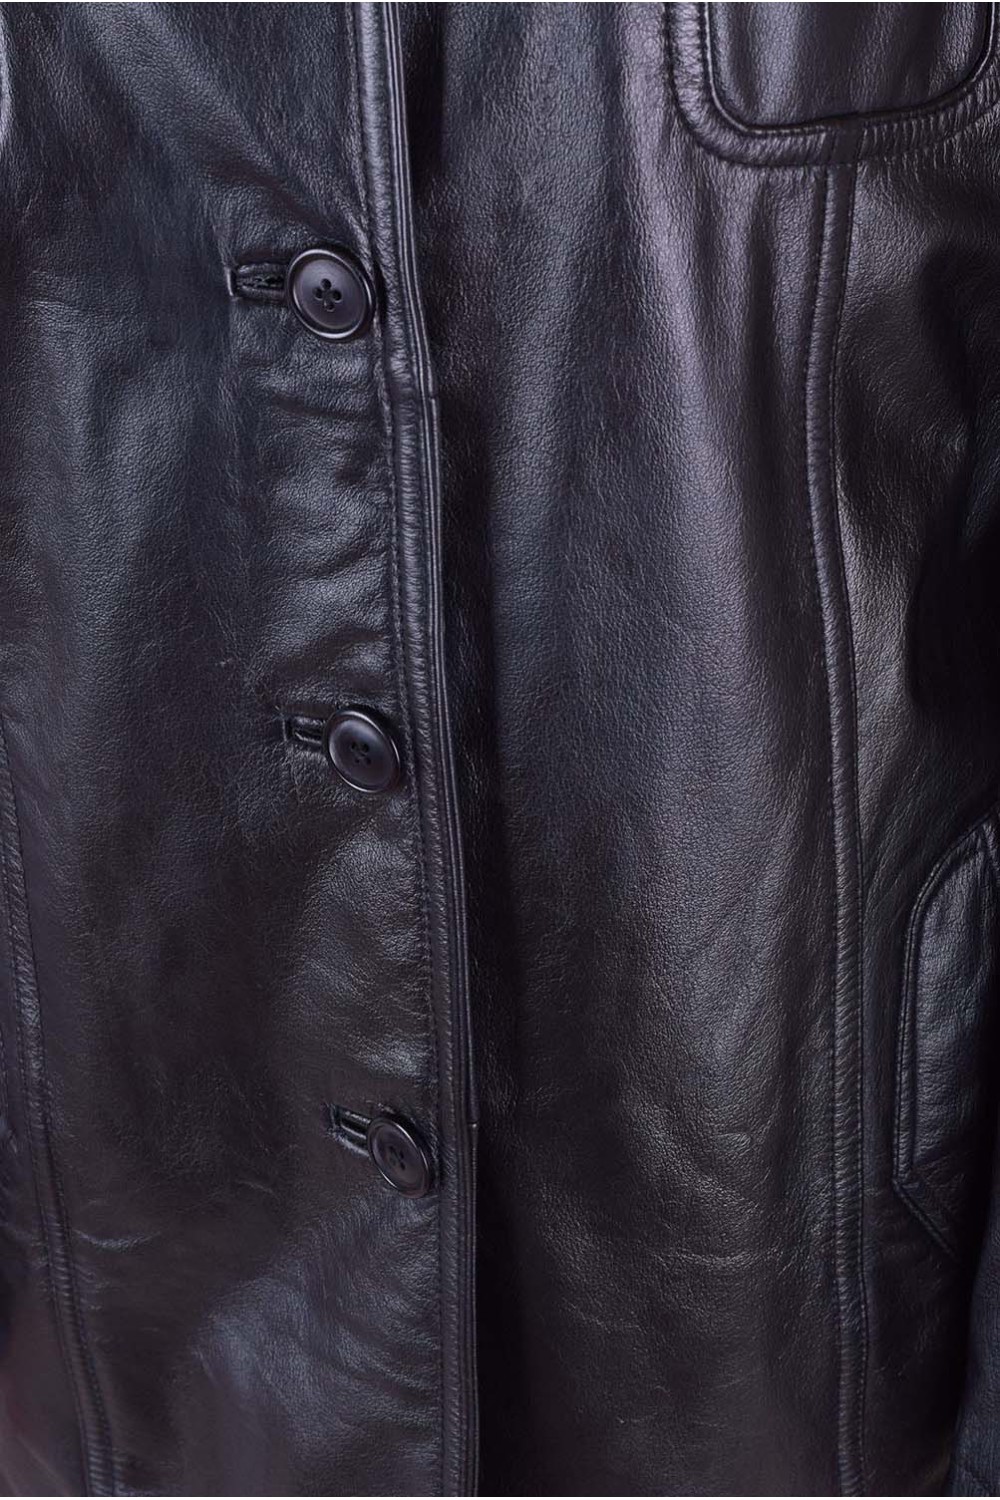 Leather jacket | furlando - leather and fur.